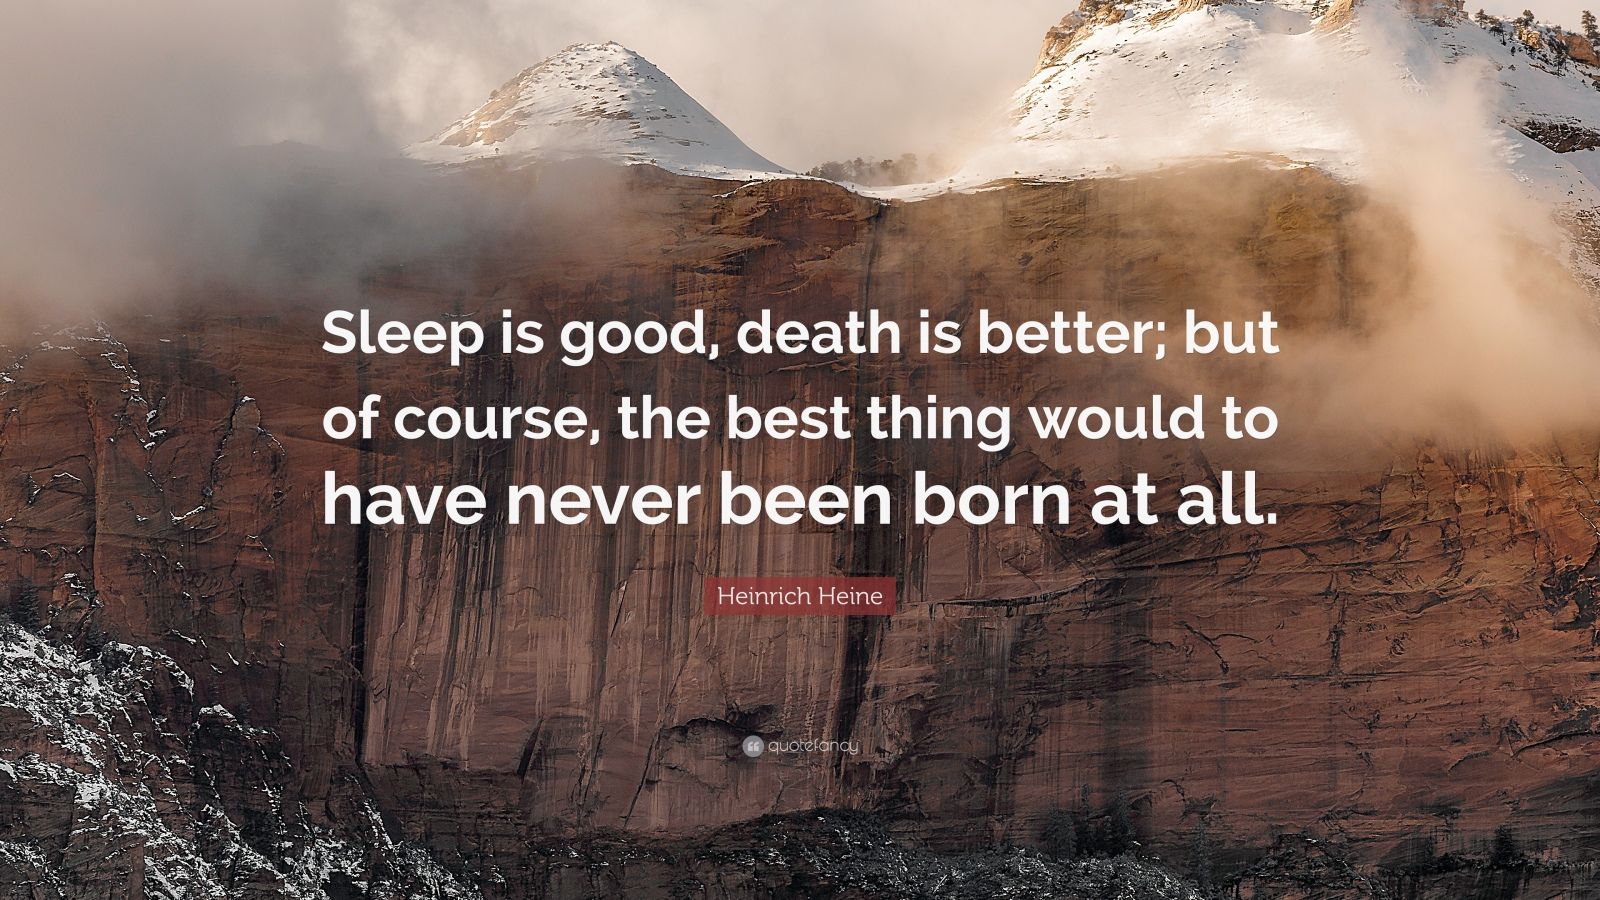 Heinrich Heine Quote: “Sleep is good, death is better; but of course